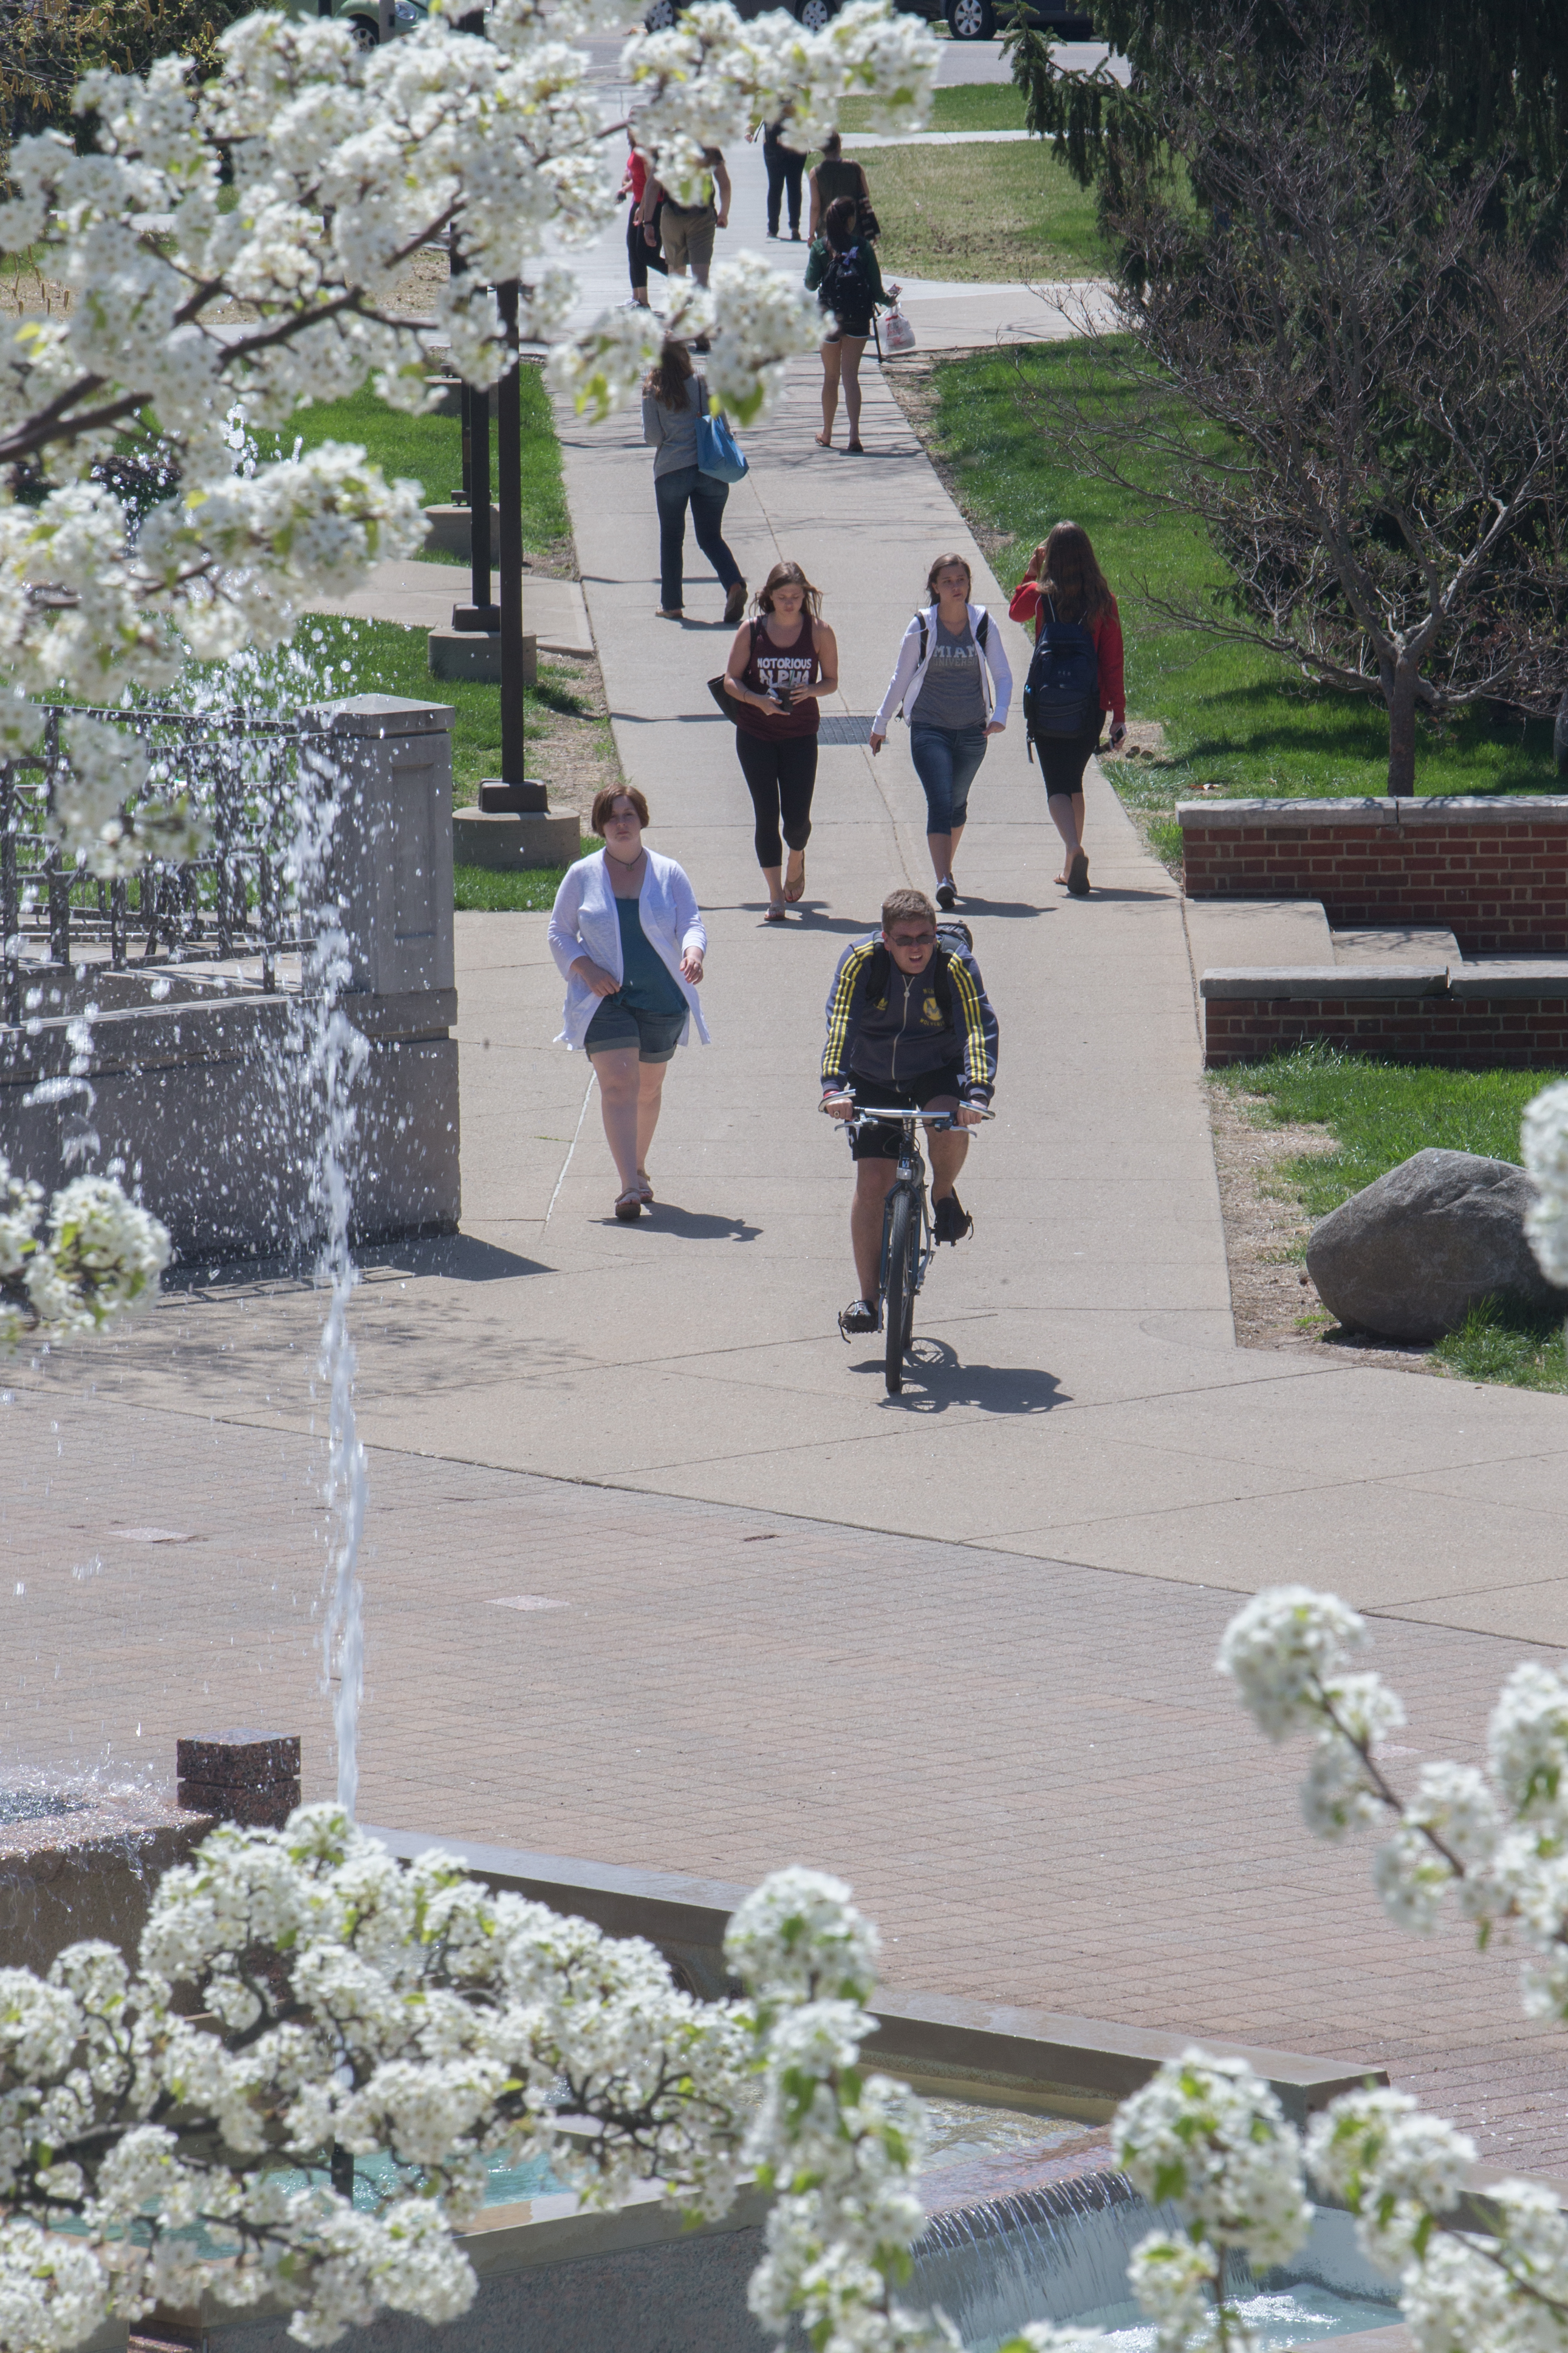 Students walk along the sidewalk in spring